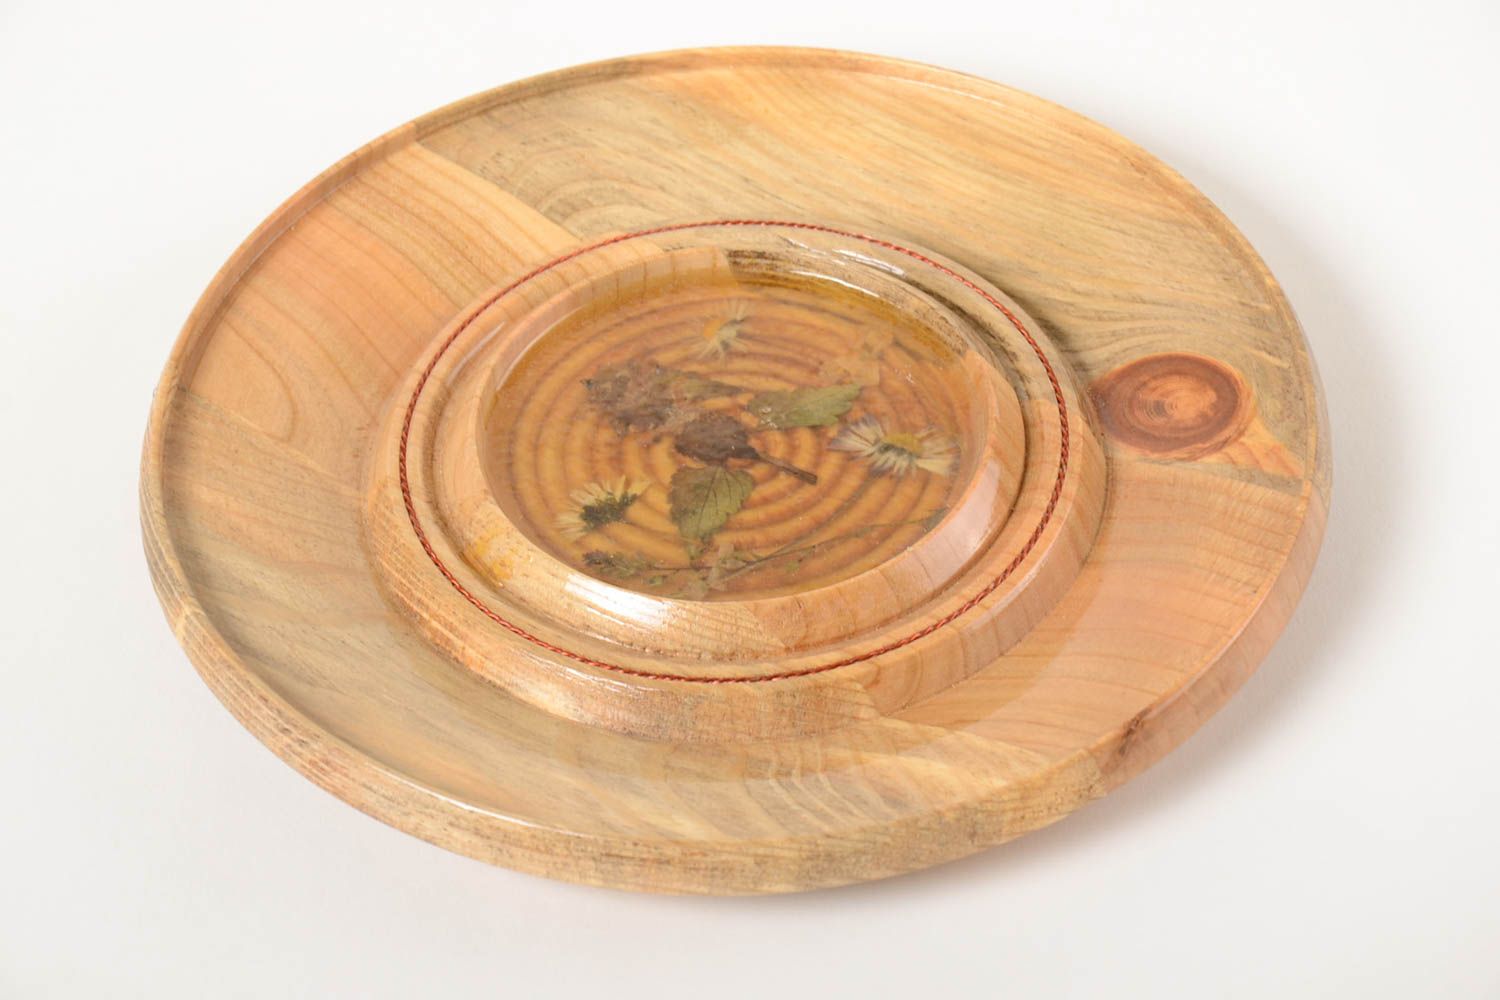 Handmade plate wooden plate designer dishes wall decor kitchen decor gift ideas photo 2